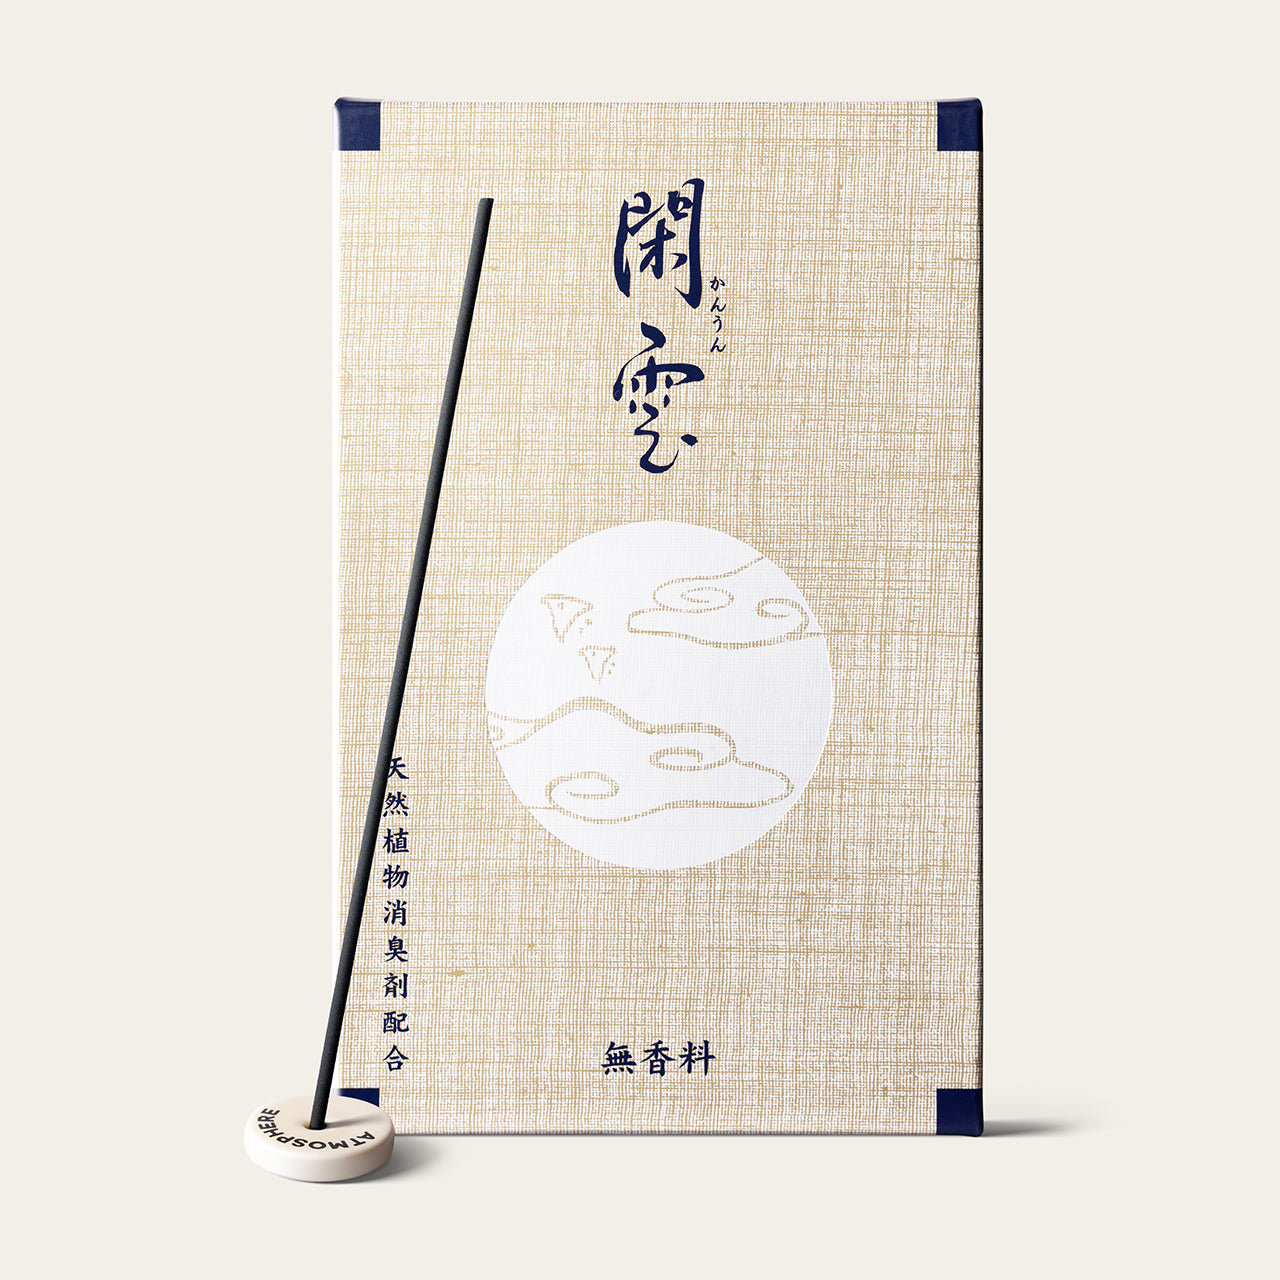 Shorindo Mellow Cloud Kanun Japanese incense sticks (300 sticks) with Atmosphere ceramic incense holder